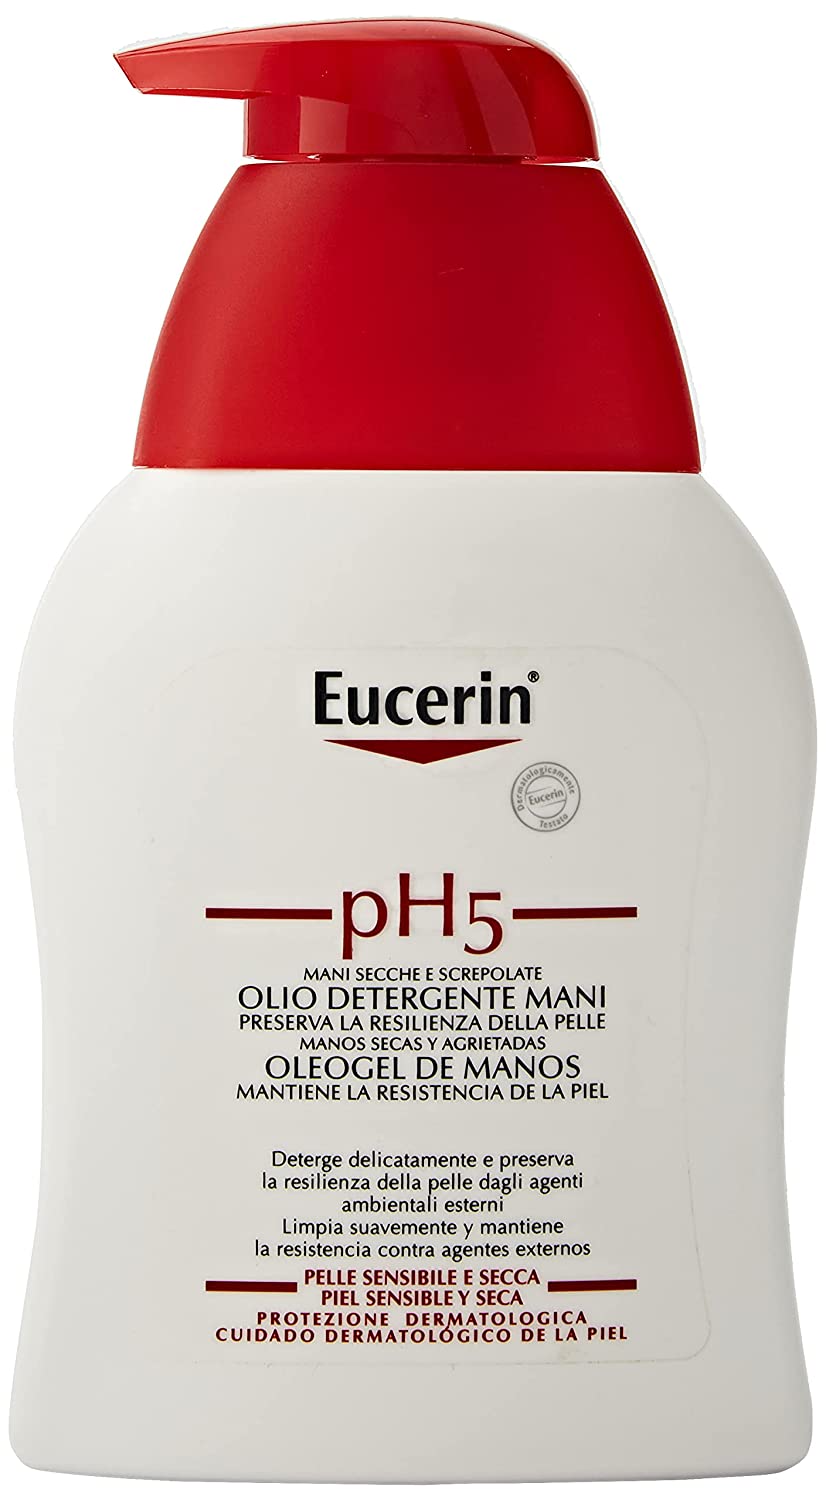 Ph5 Eucerin Hand Soap Dispenser 250 ml